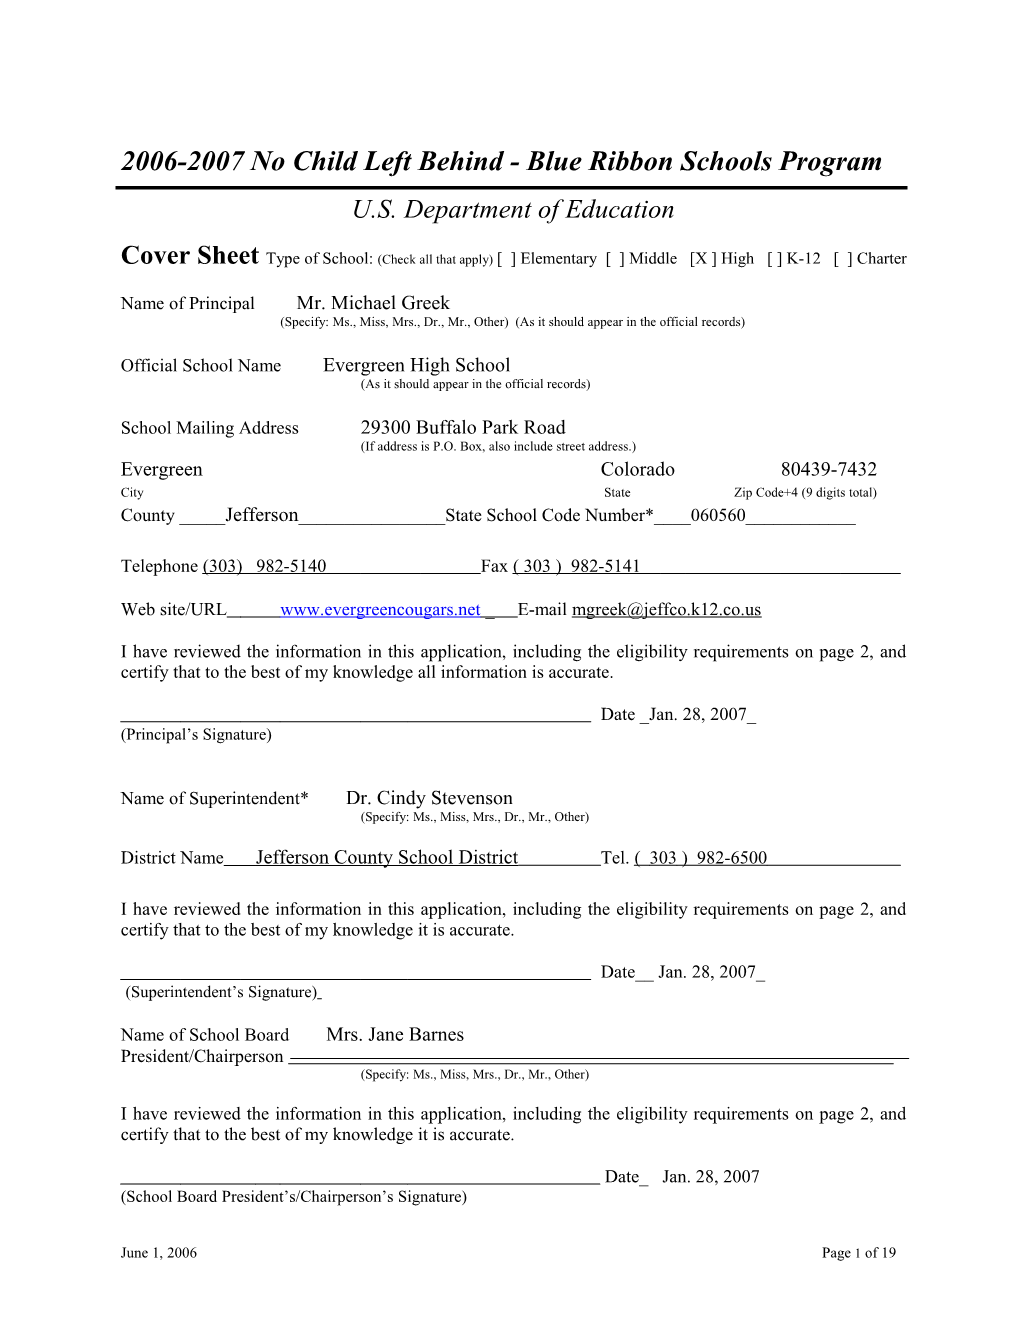 Application: 2006-2007, No Child Left Behind - Blue Ribbon Schools Program (MS Word) s15